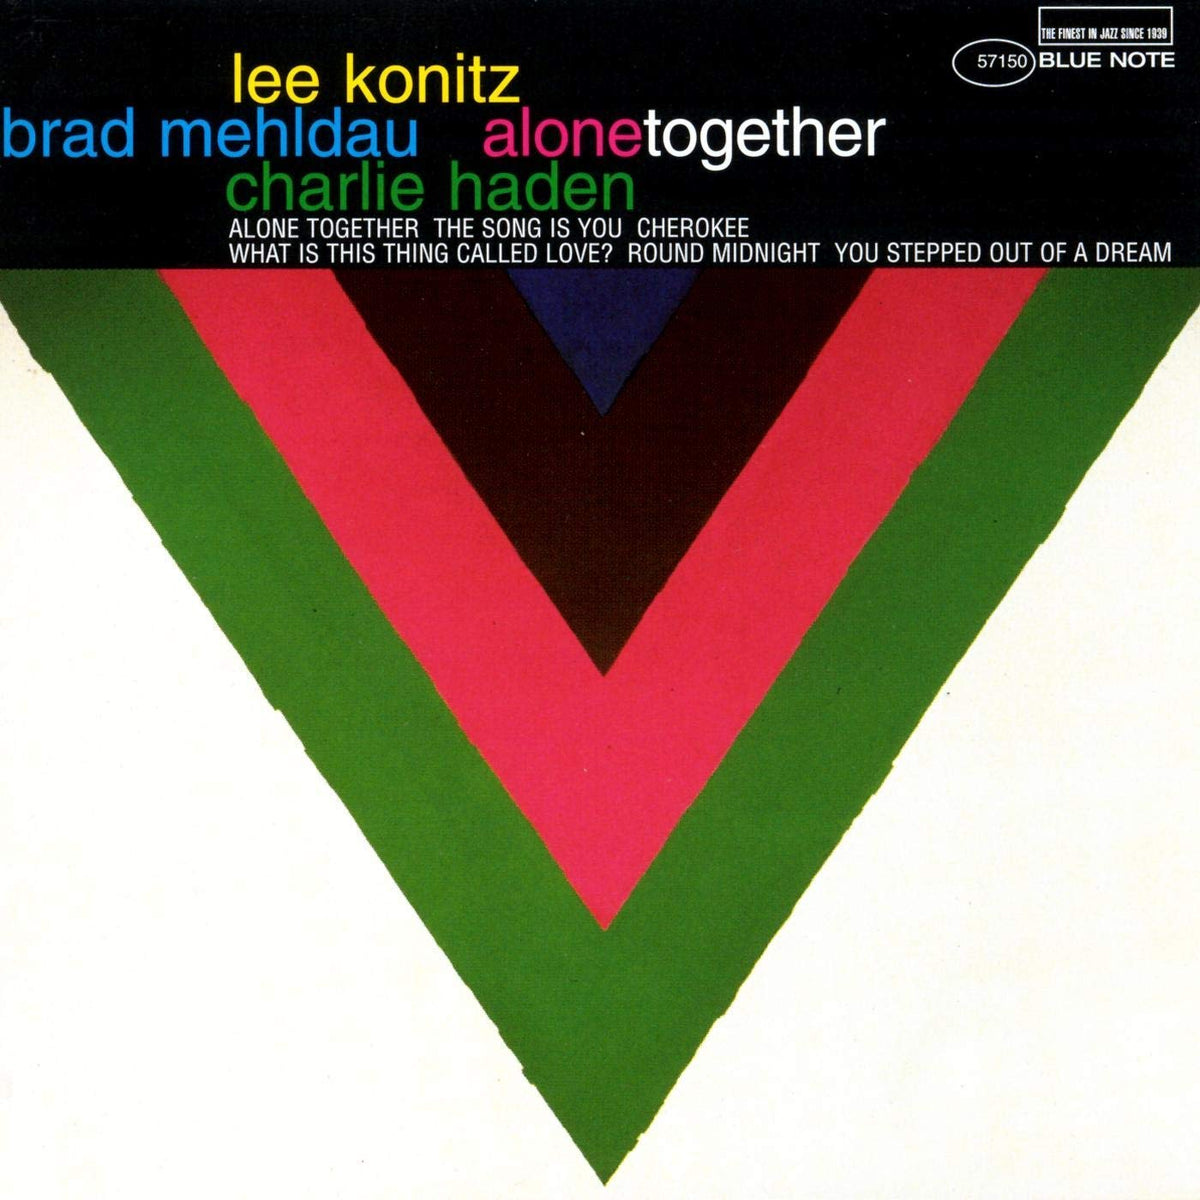 LEE KONITZ - Alone Together